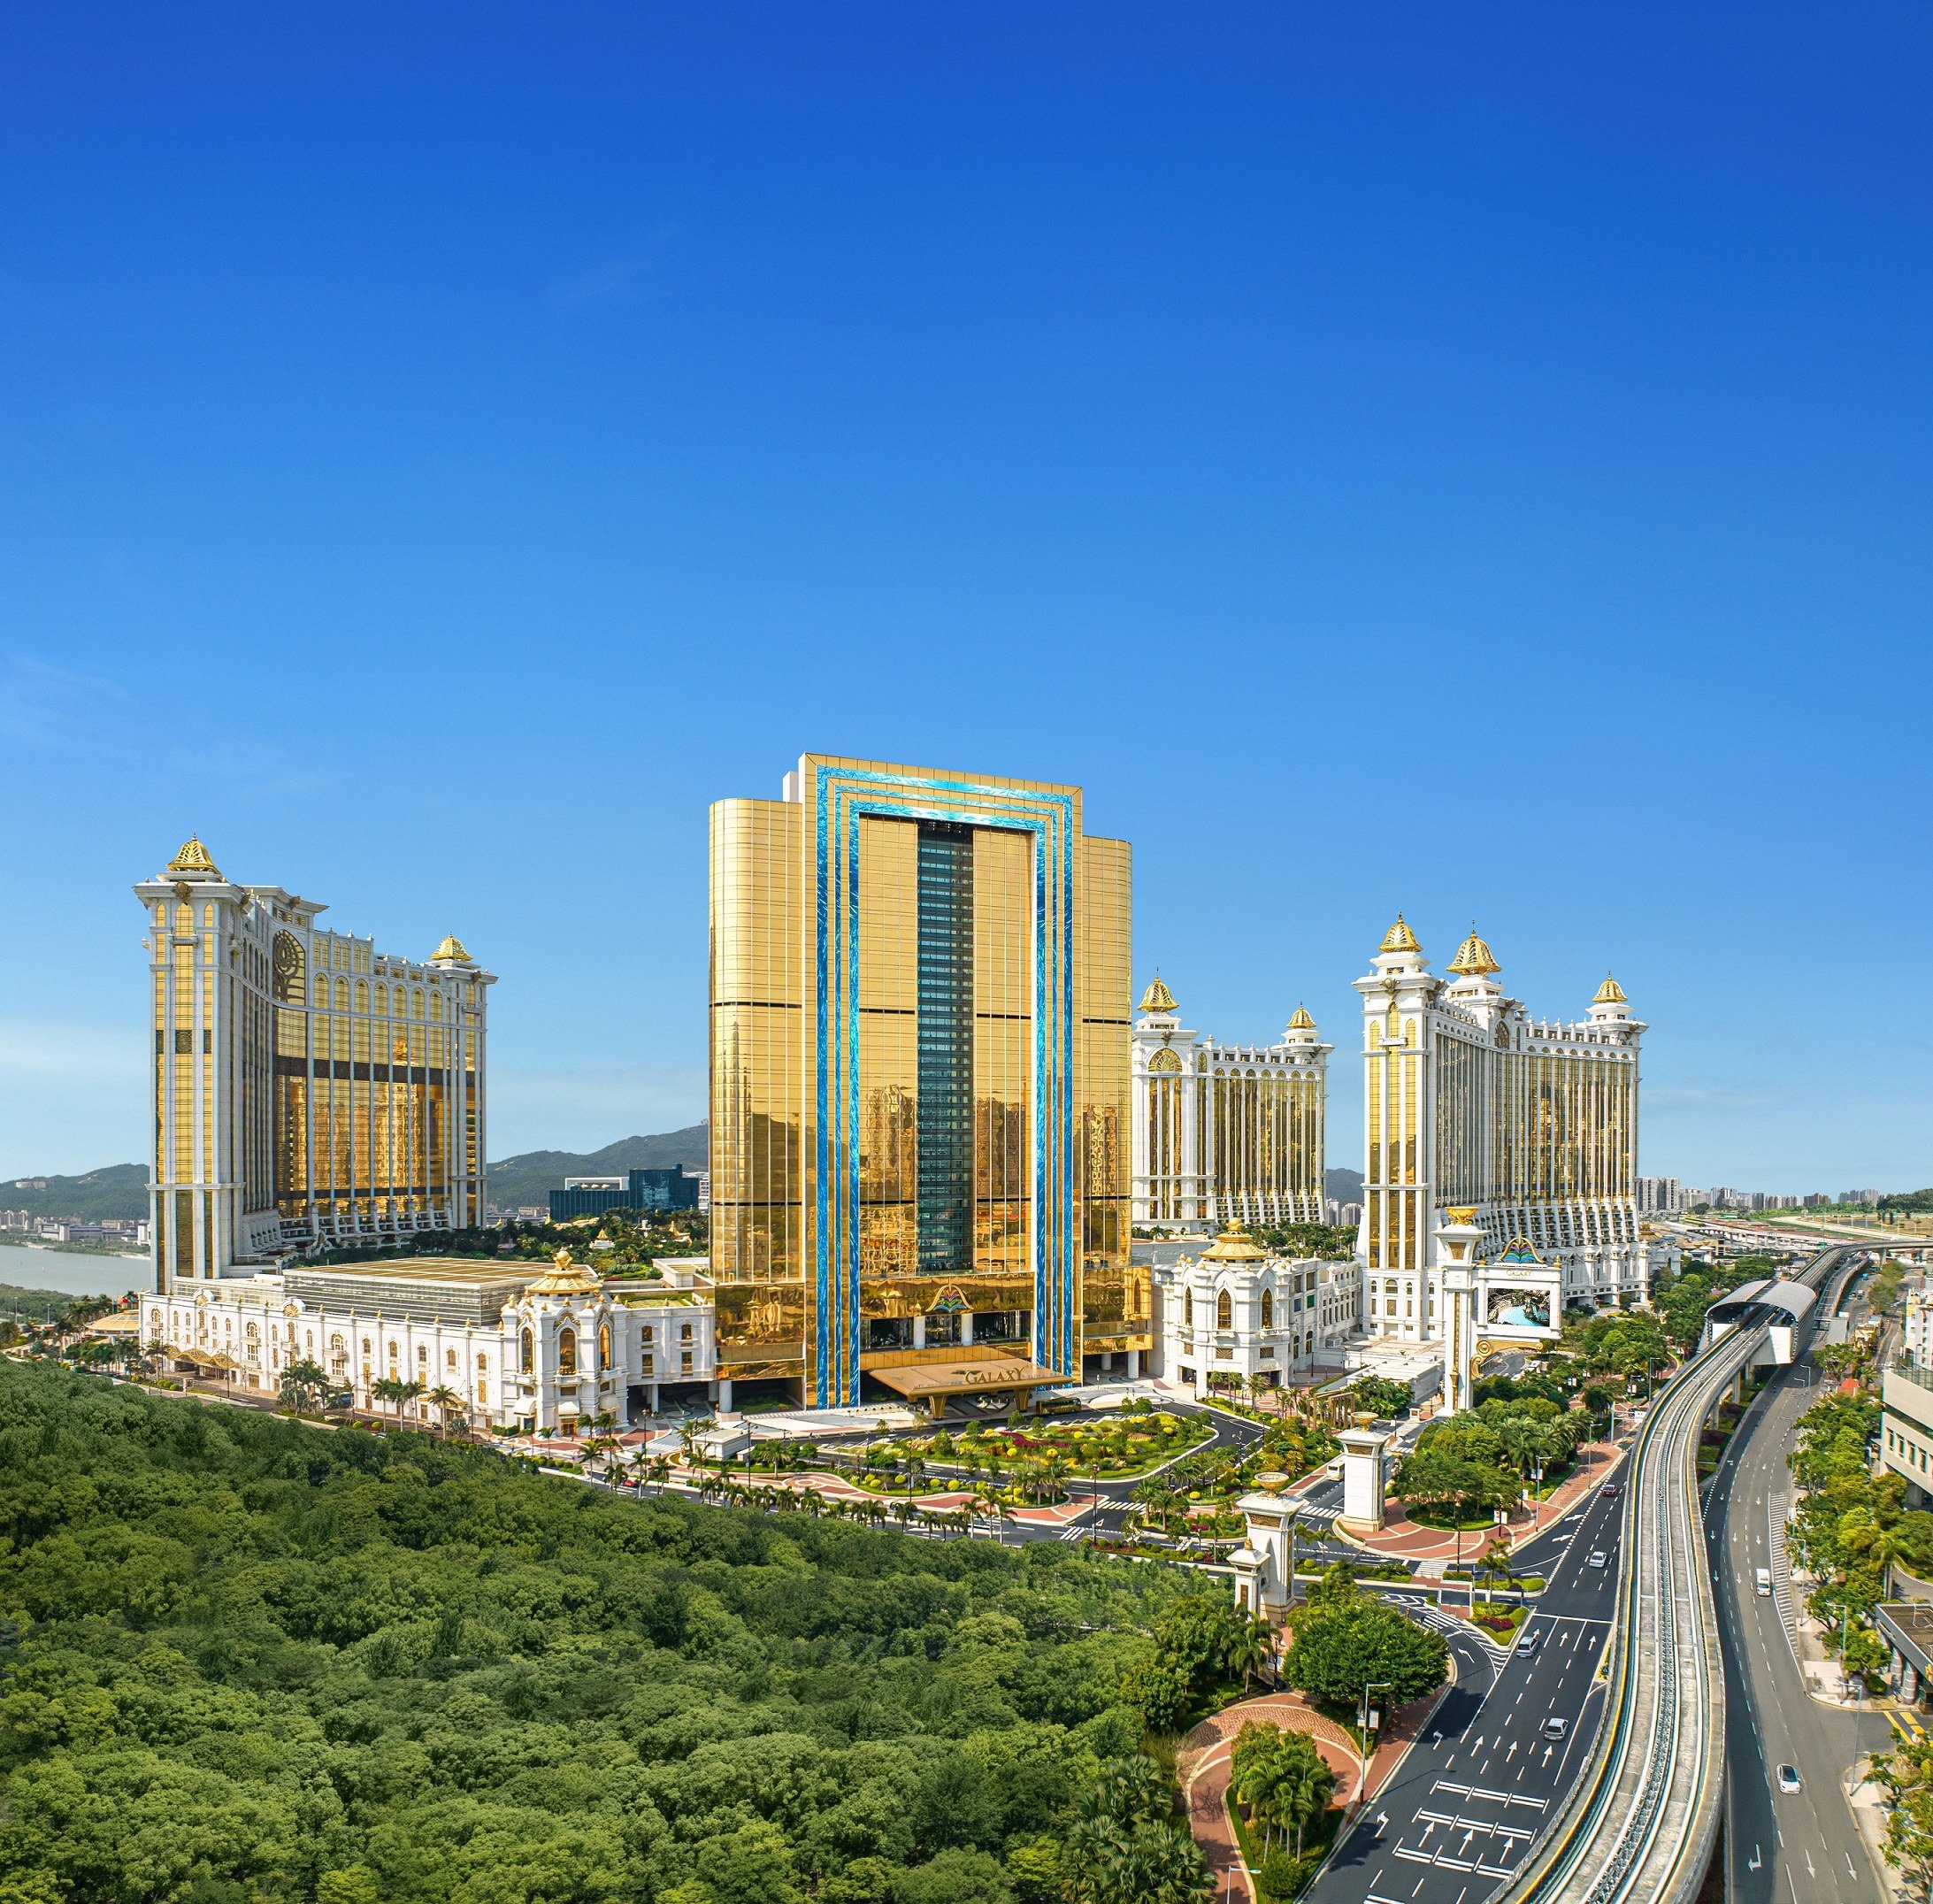 4 hot Macau hotel openings to book for Golden Week: The Karl Lagerfeld Macau, Raffles at Galaxy Macau, Andaz Macau and The Londoner Macau, with its David Beckham-designed suites. Photos: Handout